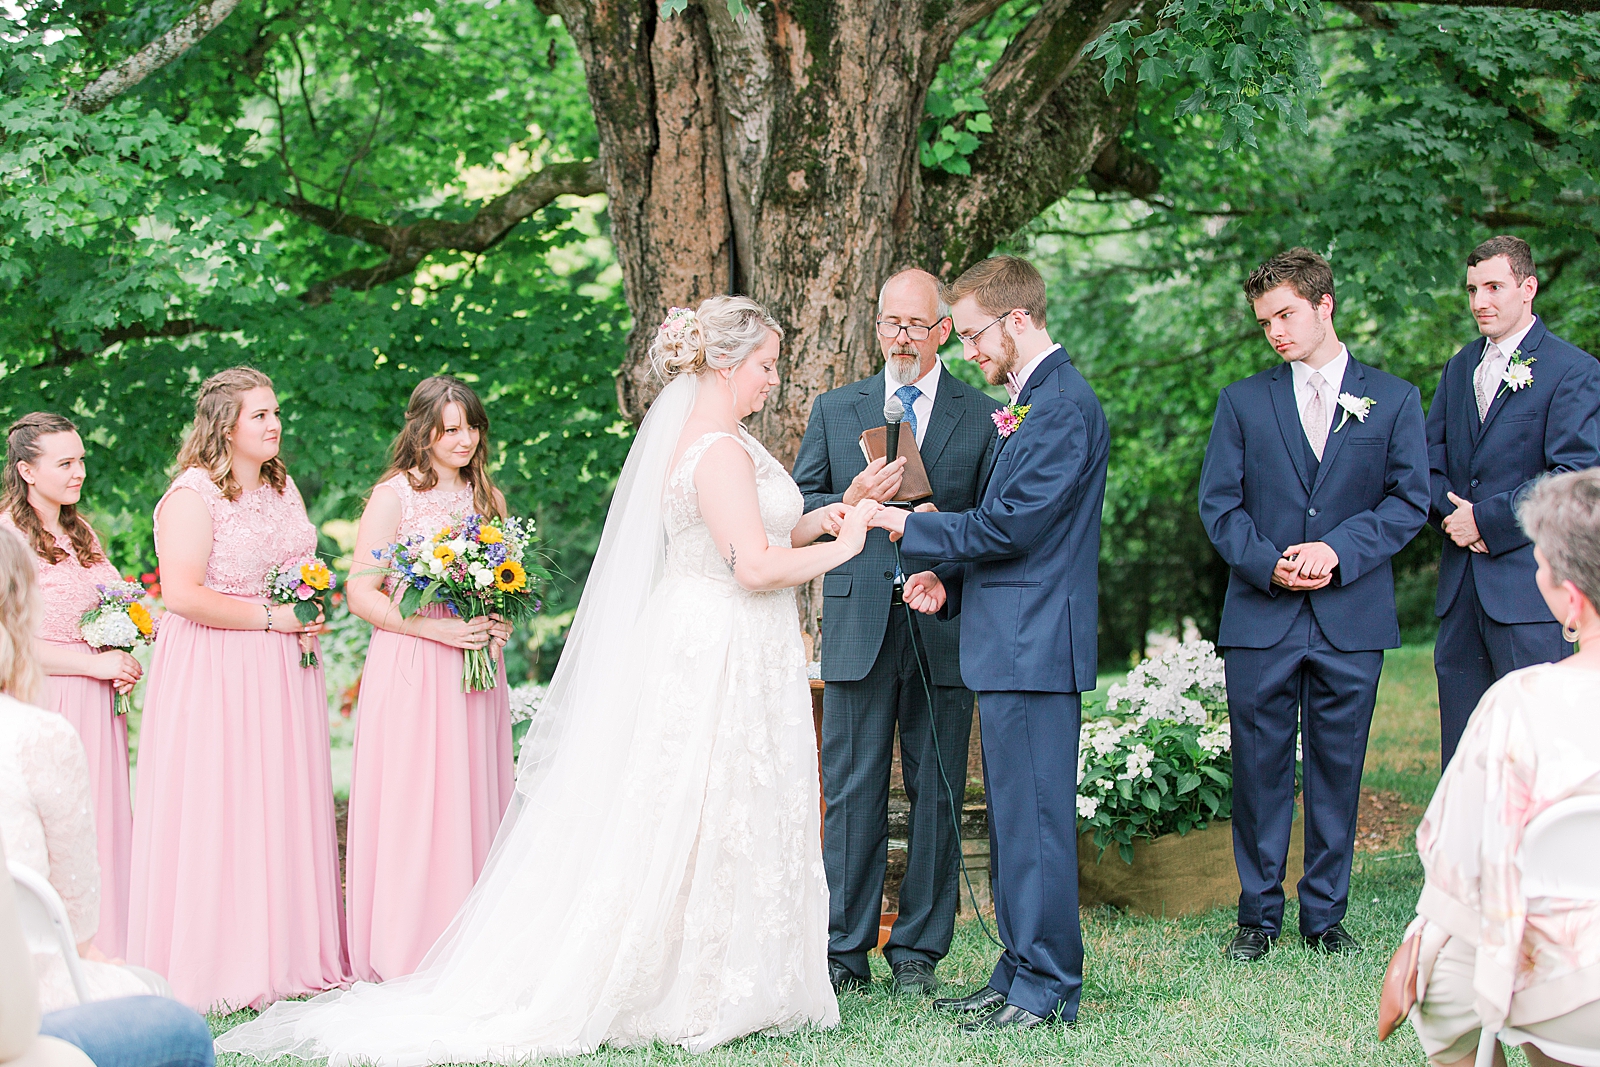 Black Fox Farms Garden Wedding Ceremony Bride and Groom Exchanging Rings Photo